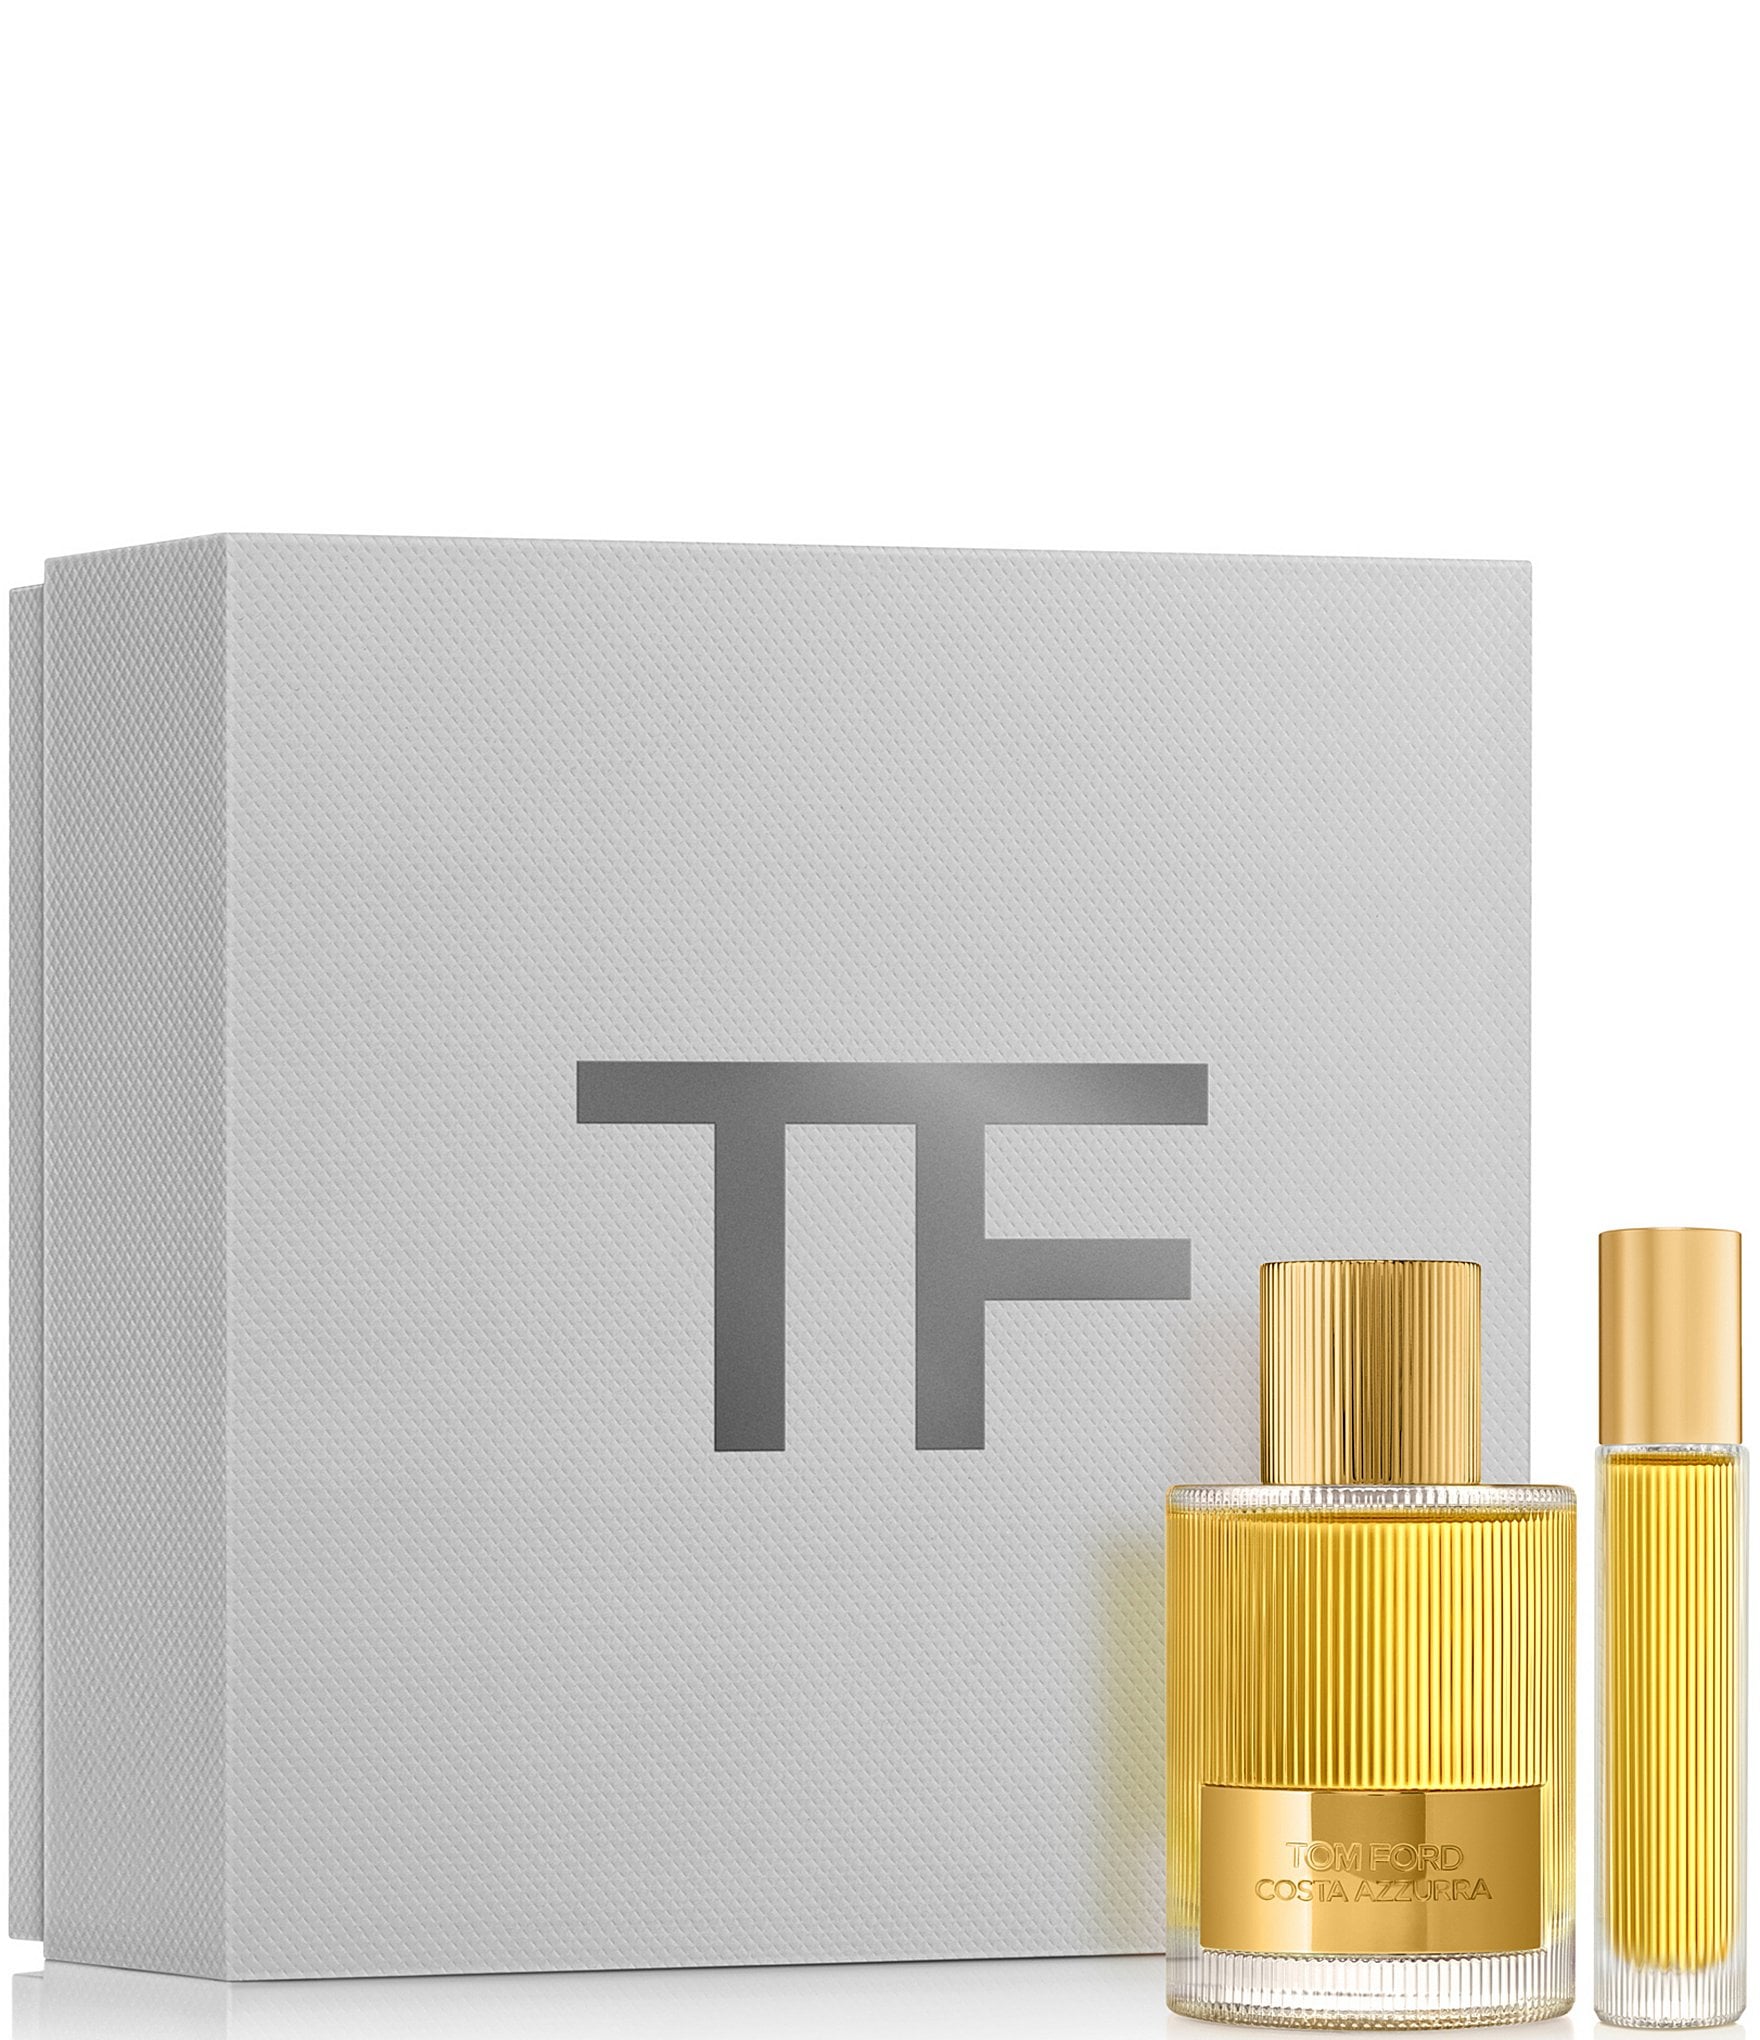 TOM FORD Costa Azzurra Eau de Parfum Gift Set | Dillard's